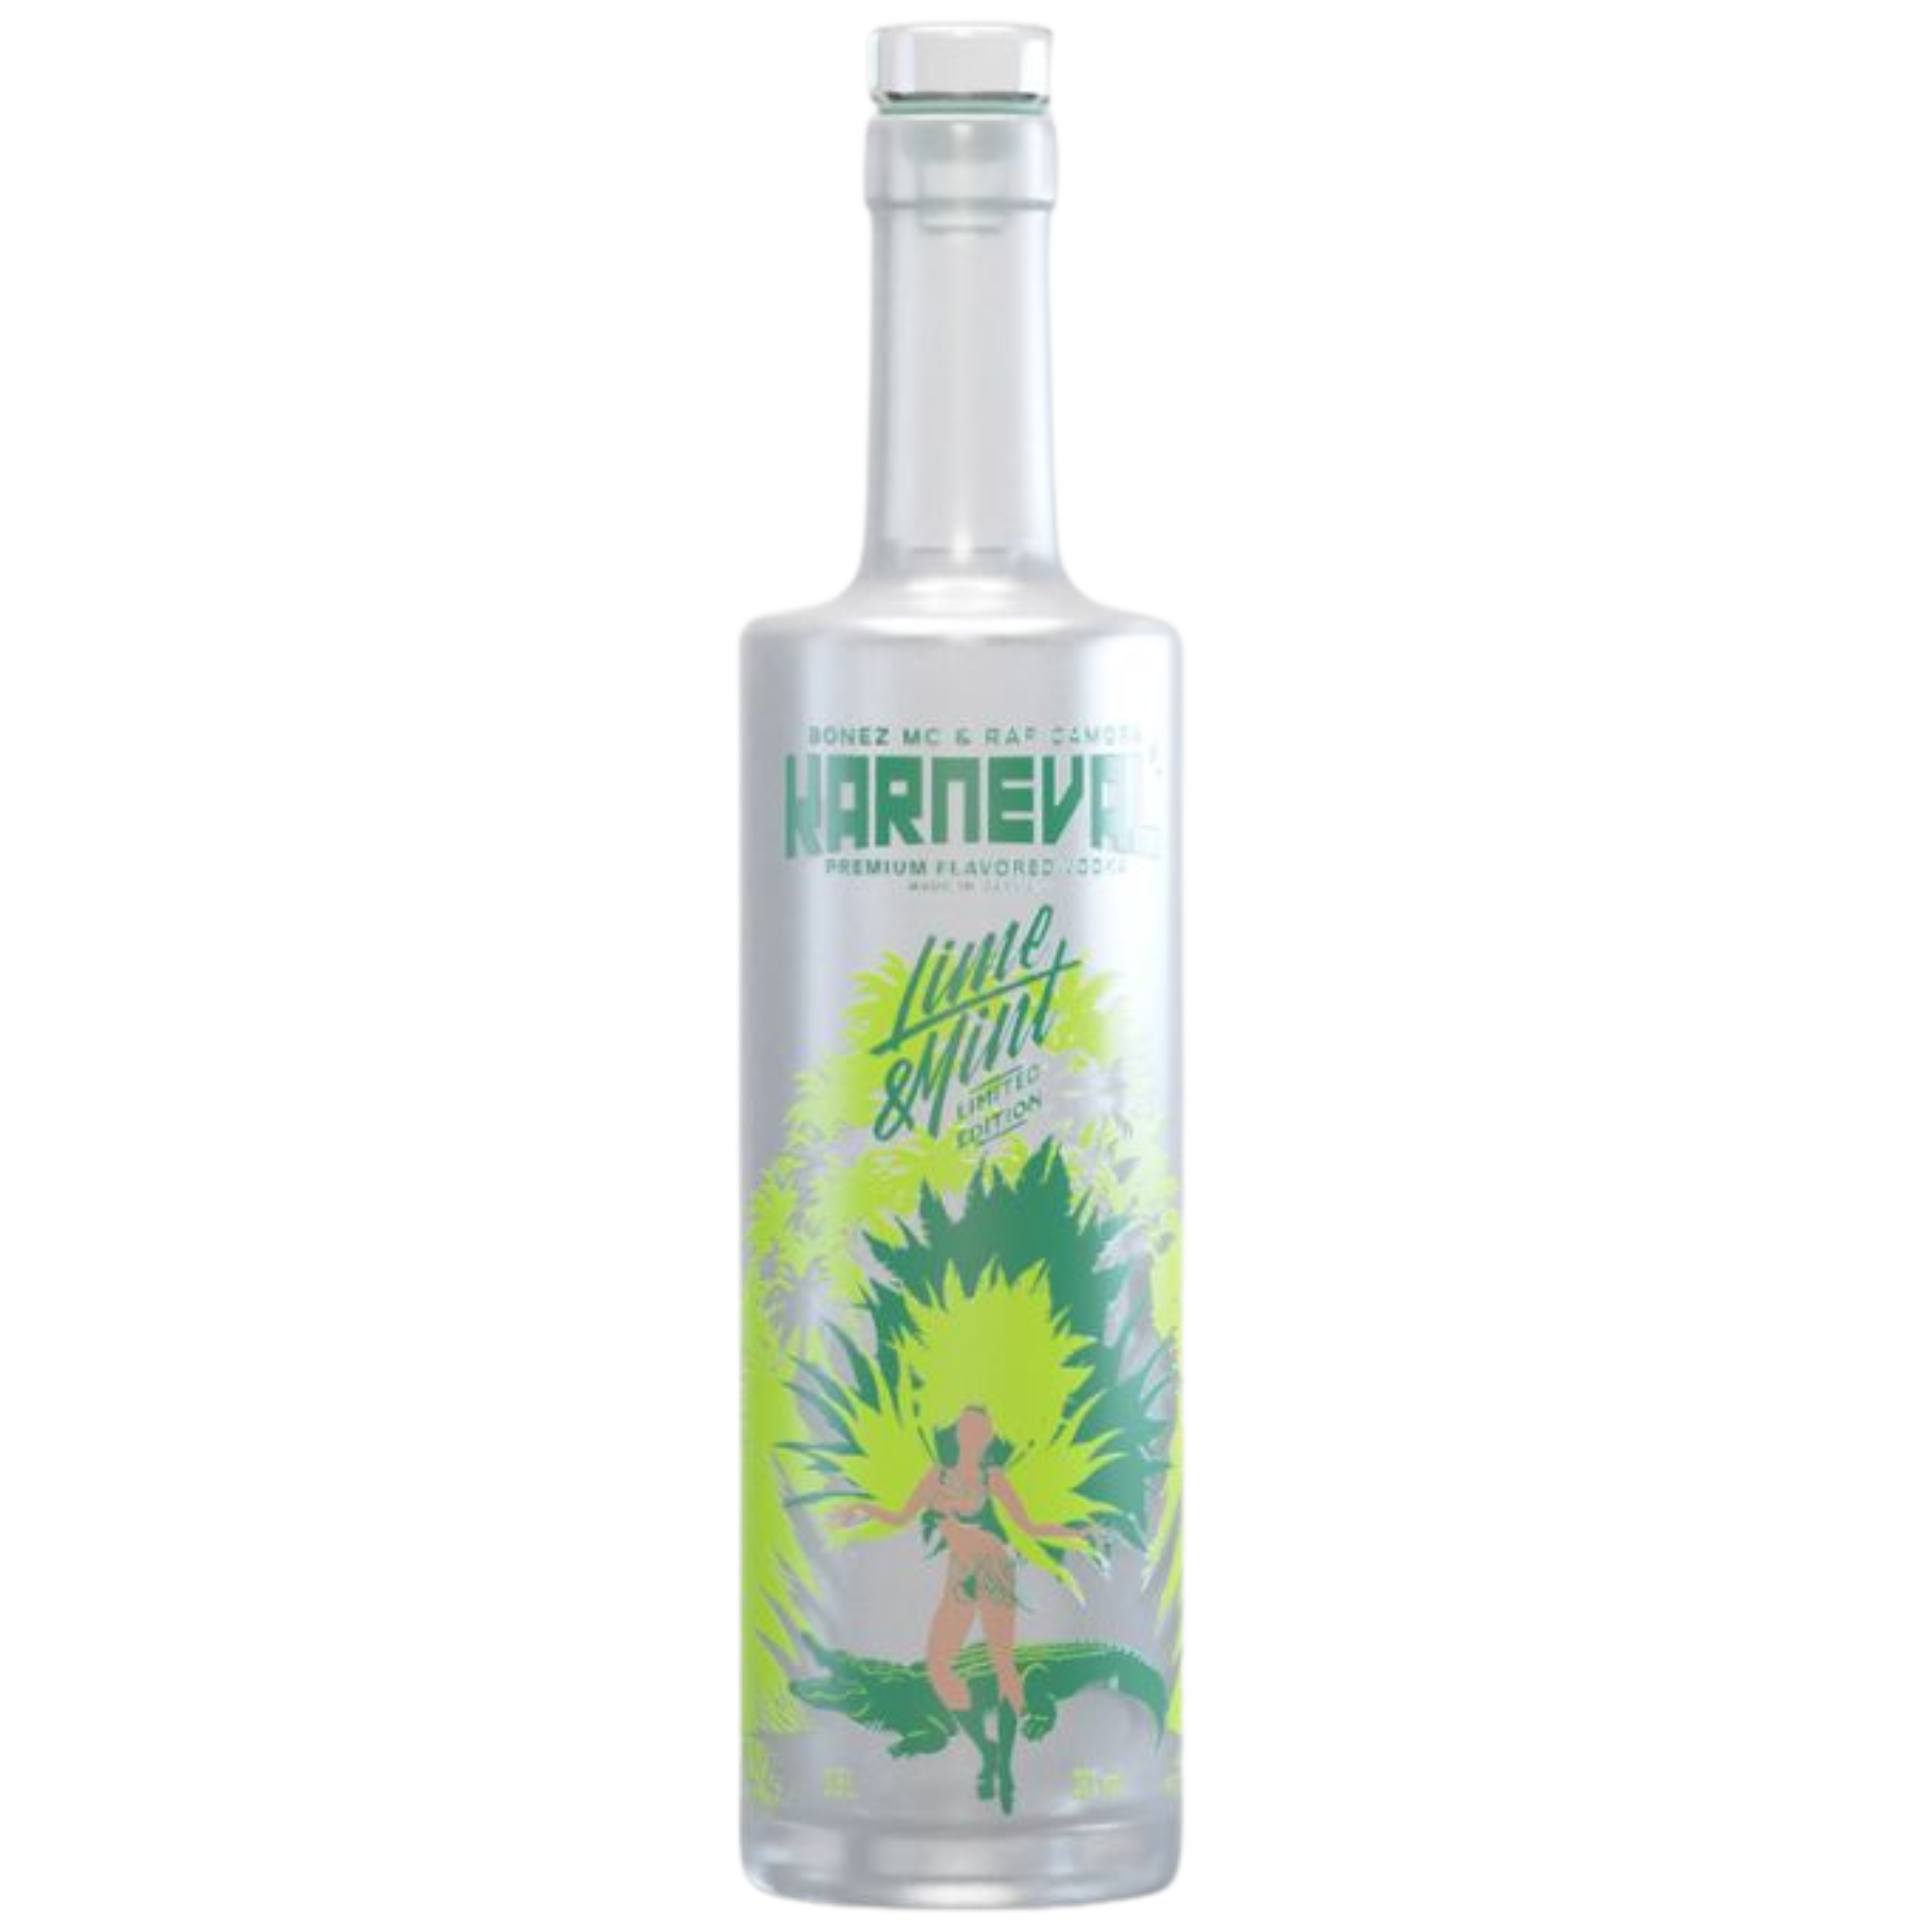 Bonez Mc & Raf Camora Lime & Mint Sonderedition Karneval Vodka 38% 0,5l